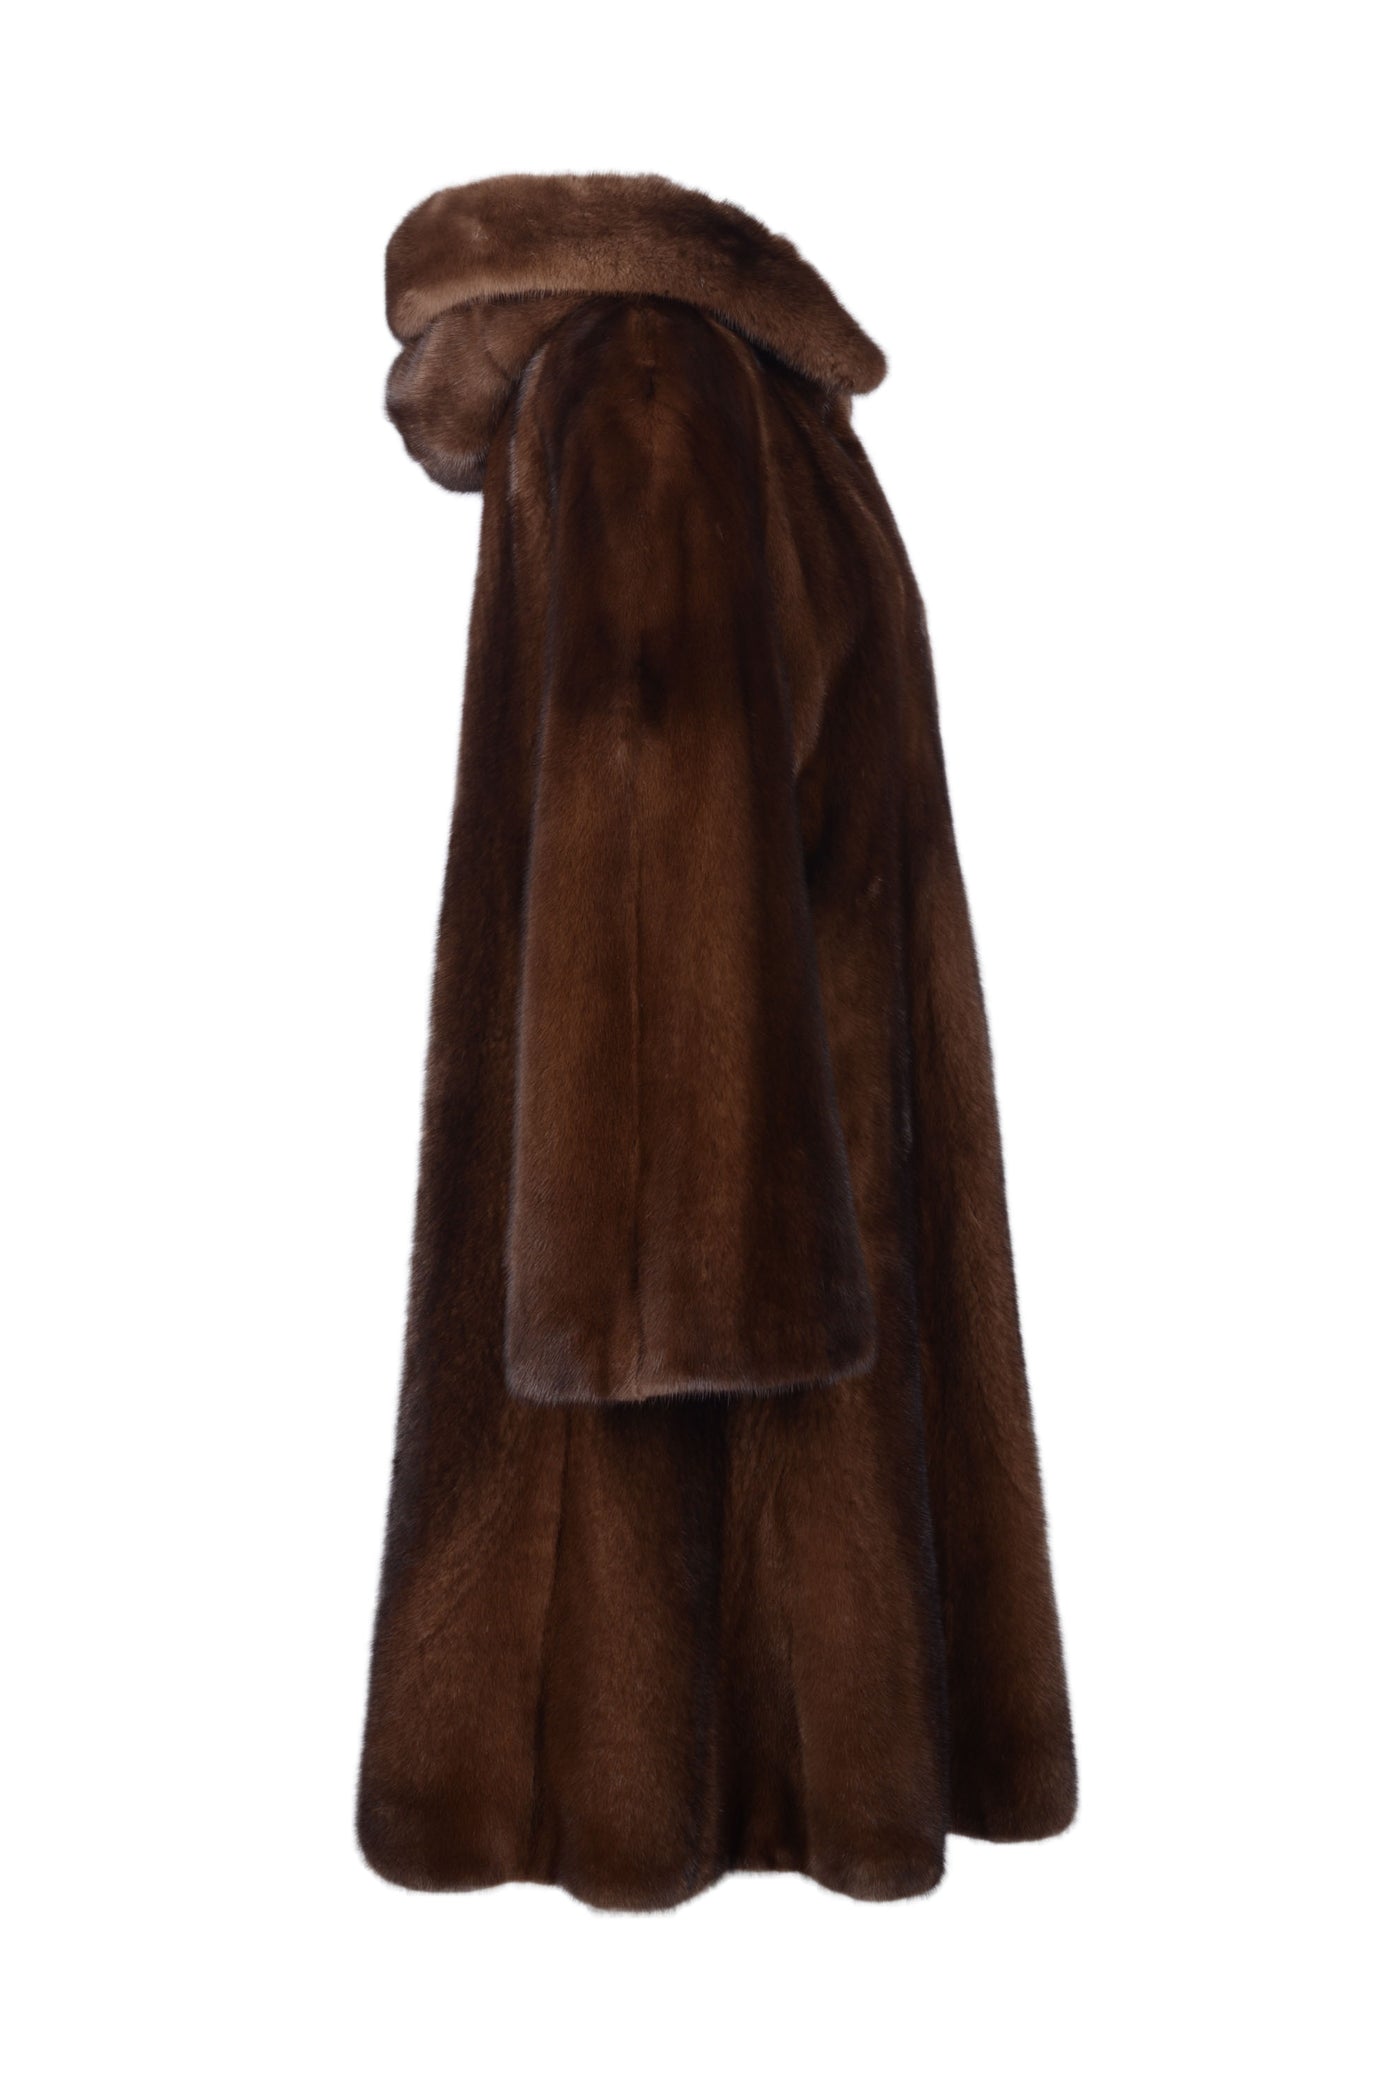 Elegant hooded mink coat